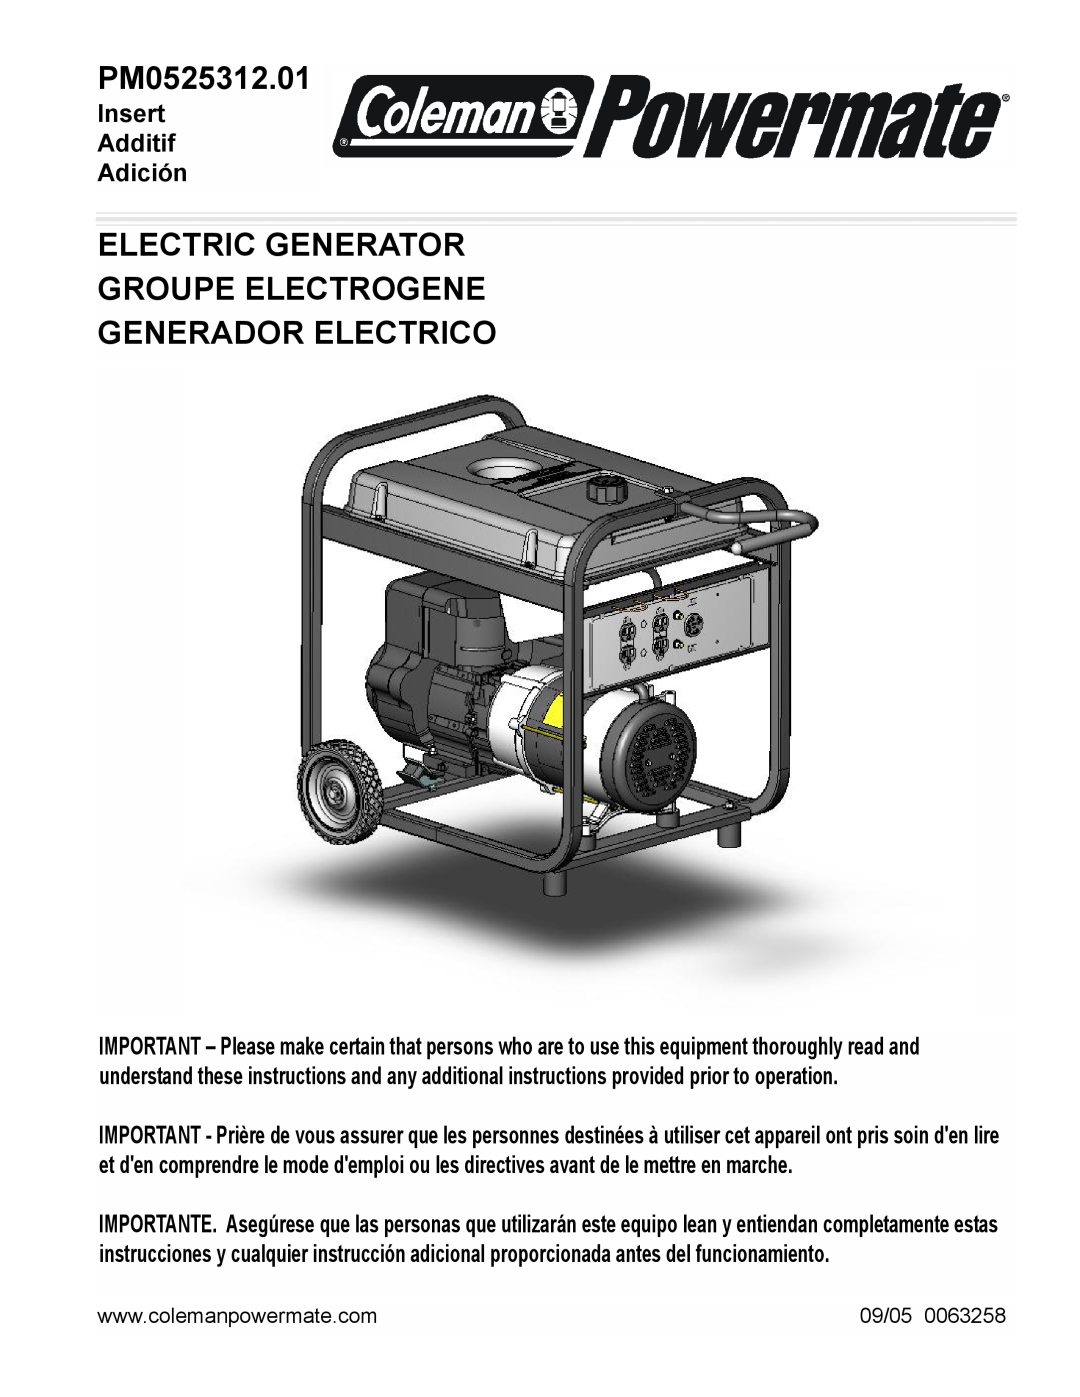 Powermate PM0525312.01 manual Electric Generator Groupe Electrogene, Generador Electrico, Insert Additif Adición, 09/05 